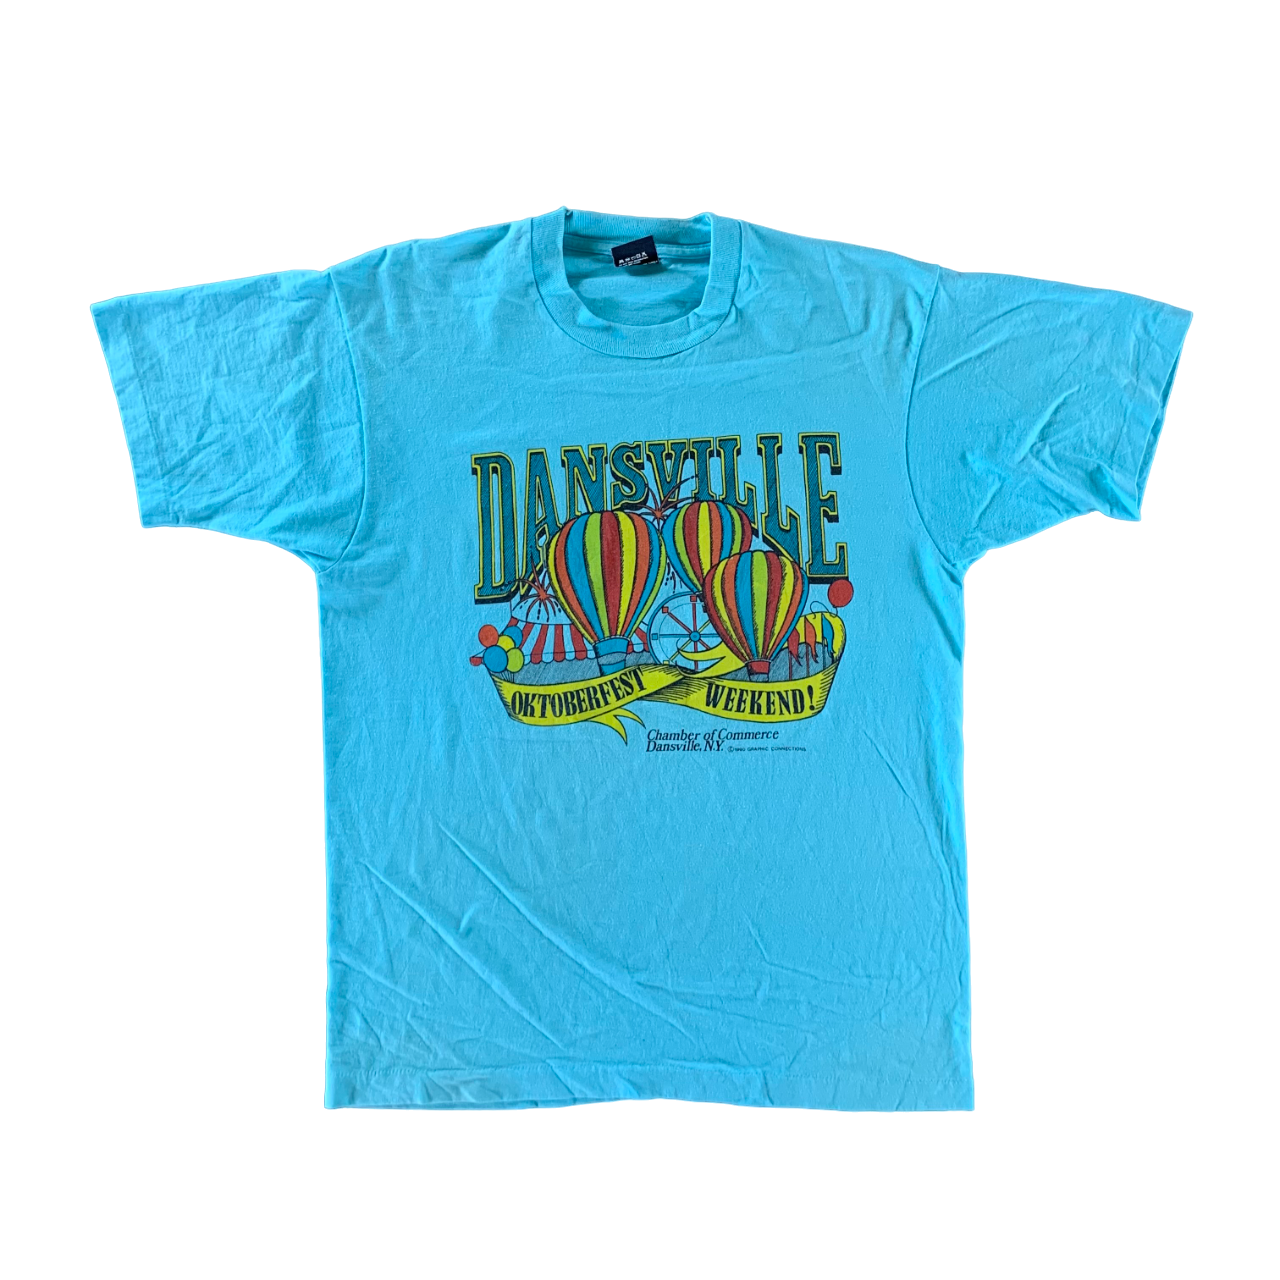 Vintage 1990s Dansville New York T-shirt size Large